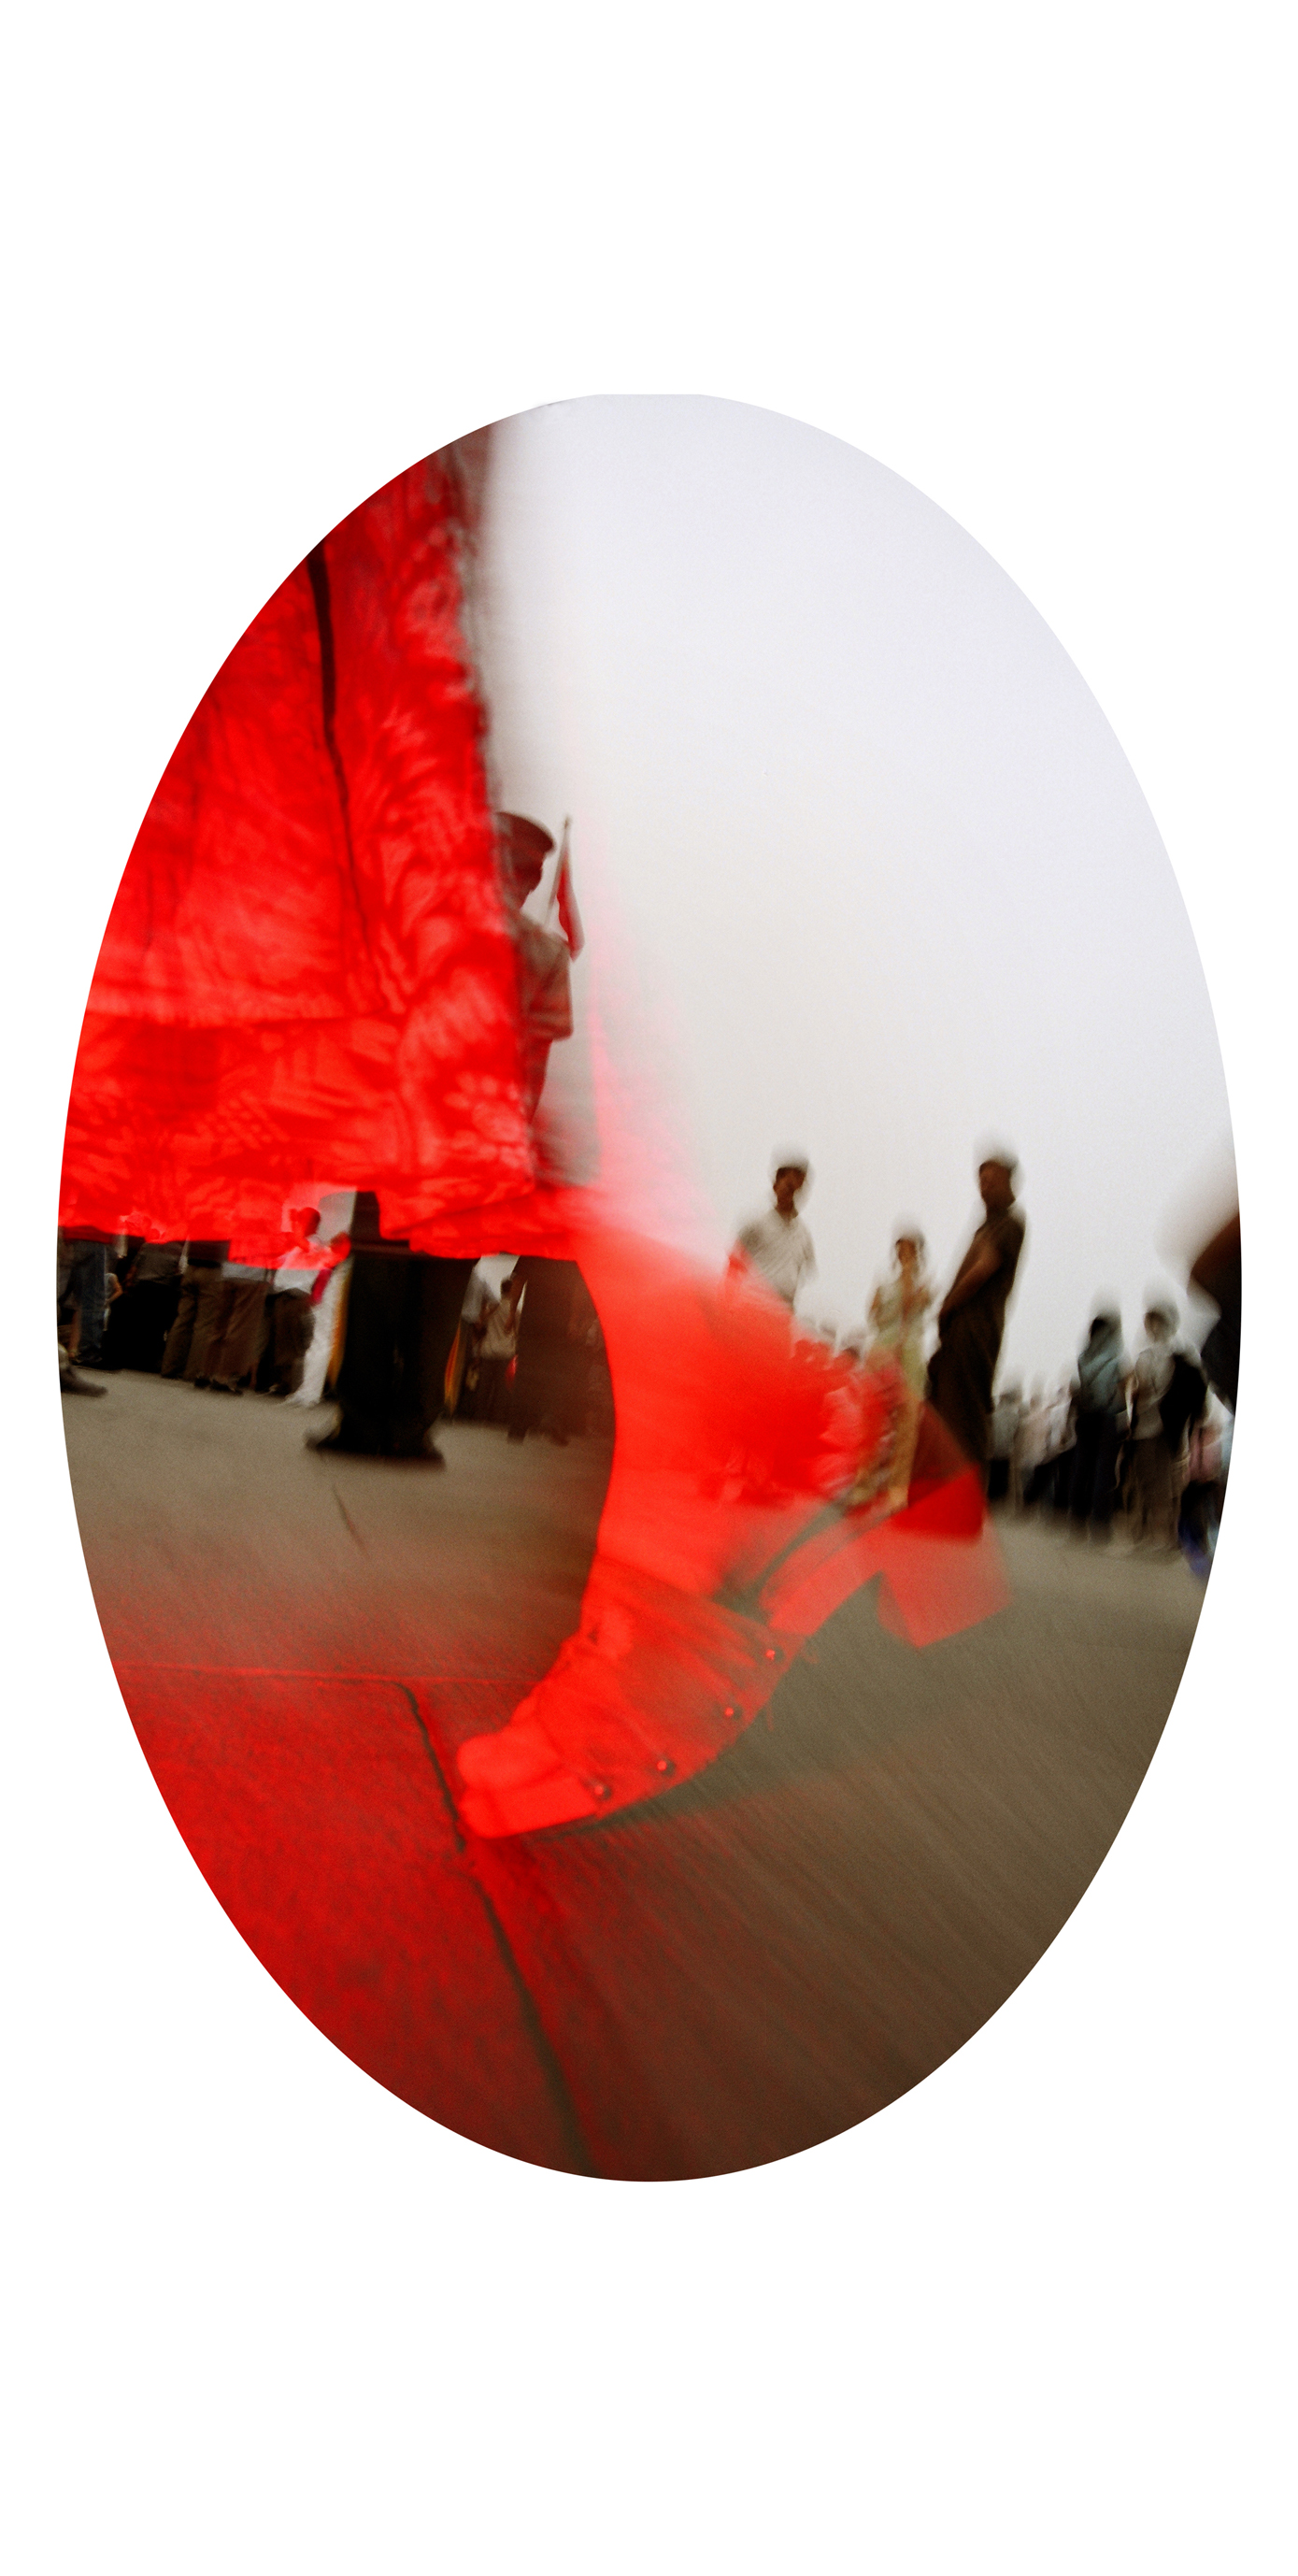 6 the unbearable lightness of Takako dress Moyi   Dog eye   Chongzi & her red skirt   03 moyi photography of china - Moyi (5) | Guest Post | Urban photography | Portrait photography - Guest Article: Moyi by Léo de Boisgisson